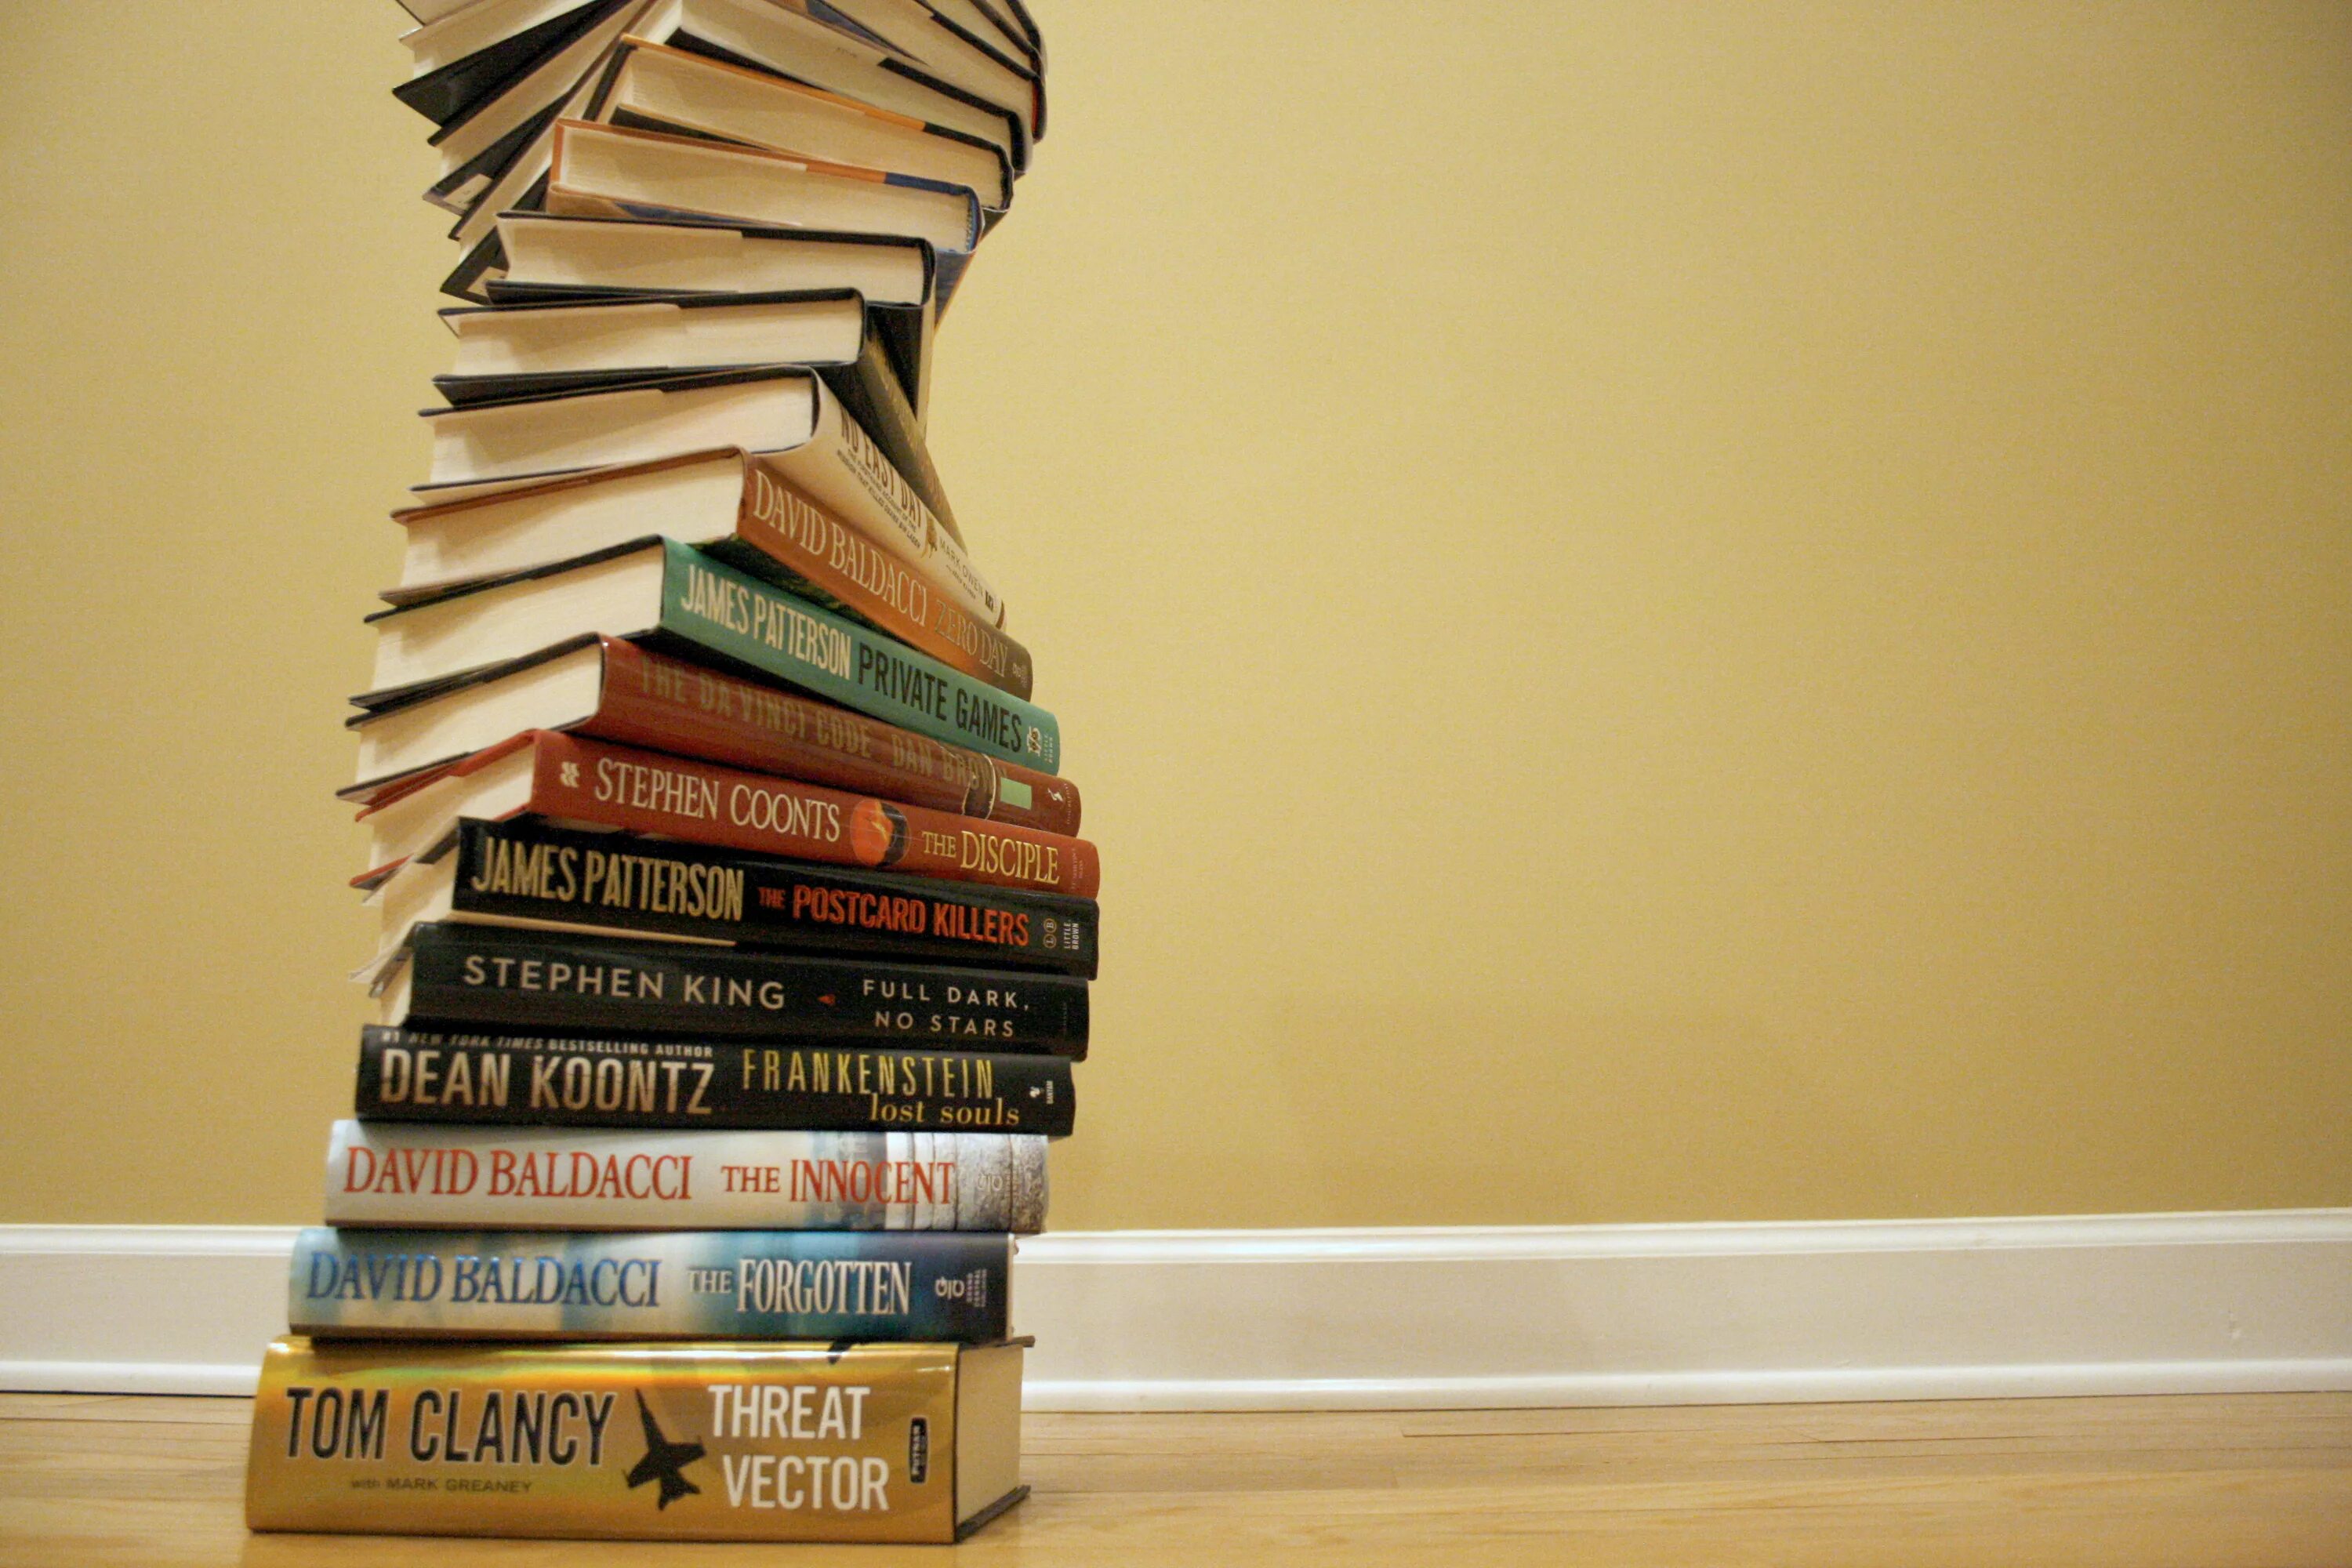 Books in my life. Чтение книг. Хобби чтение книг. Стопка книг. Увлечение чтение книг.